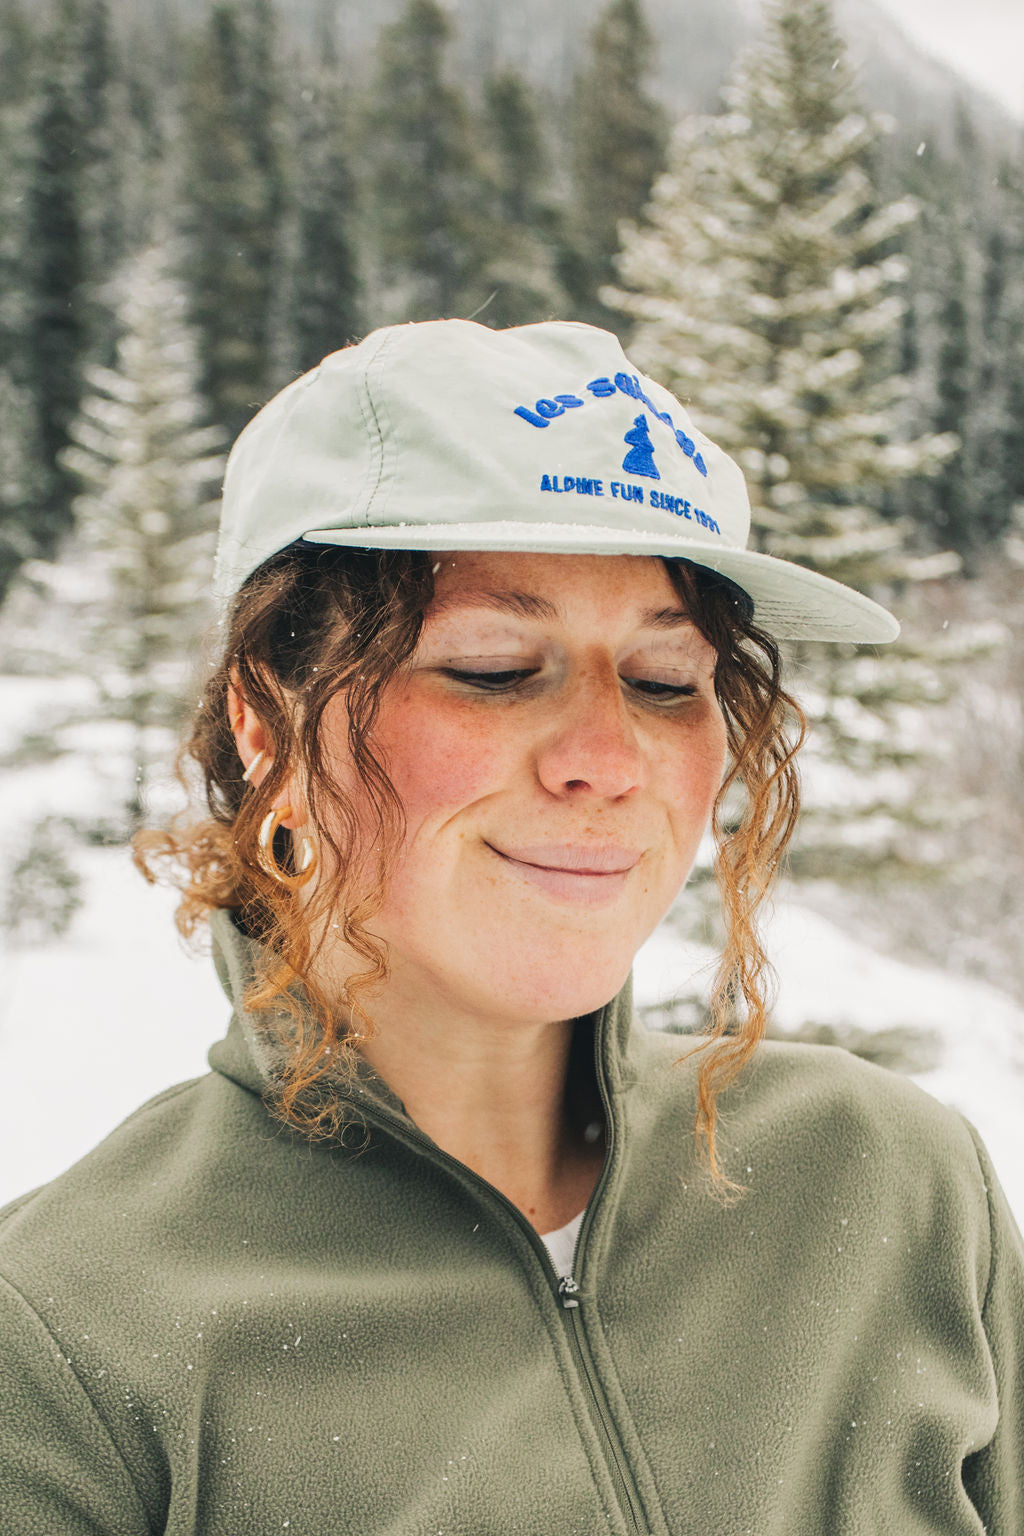 Alpine Fun cap, sage cap great for running, skiing, retro look. Outdoor in the snow, how it fits